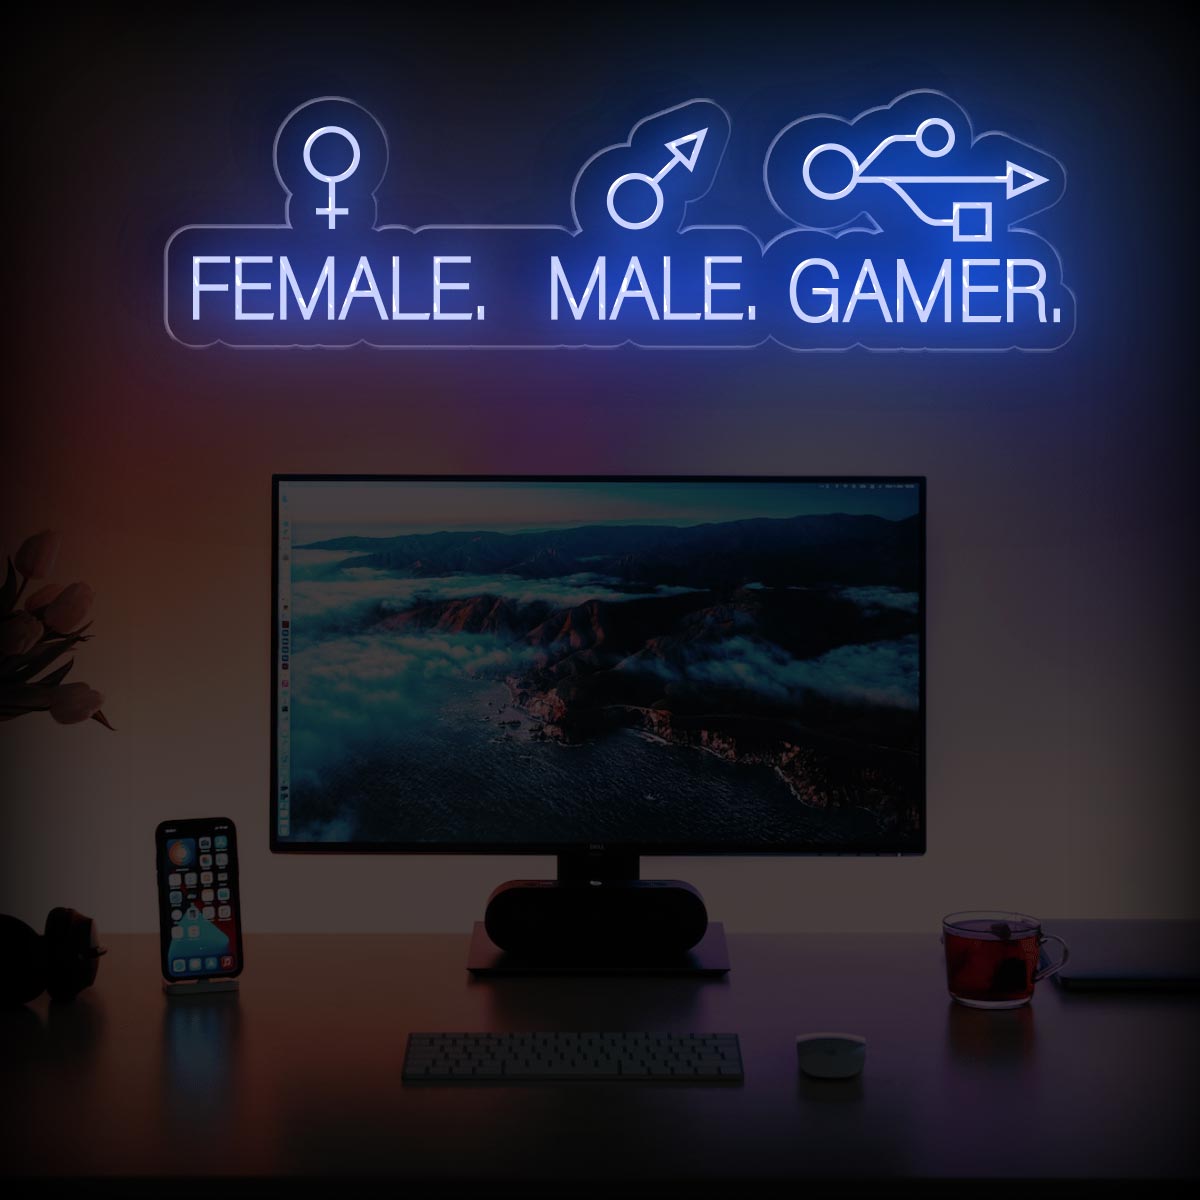 Male Female Gamer - Funny Game Room Neon Sign - NEONXPERT